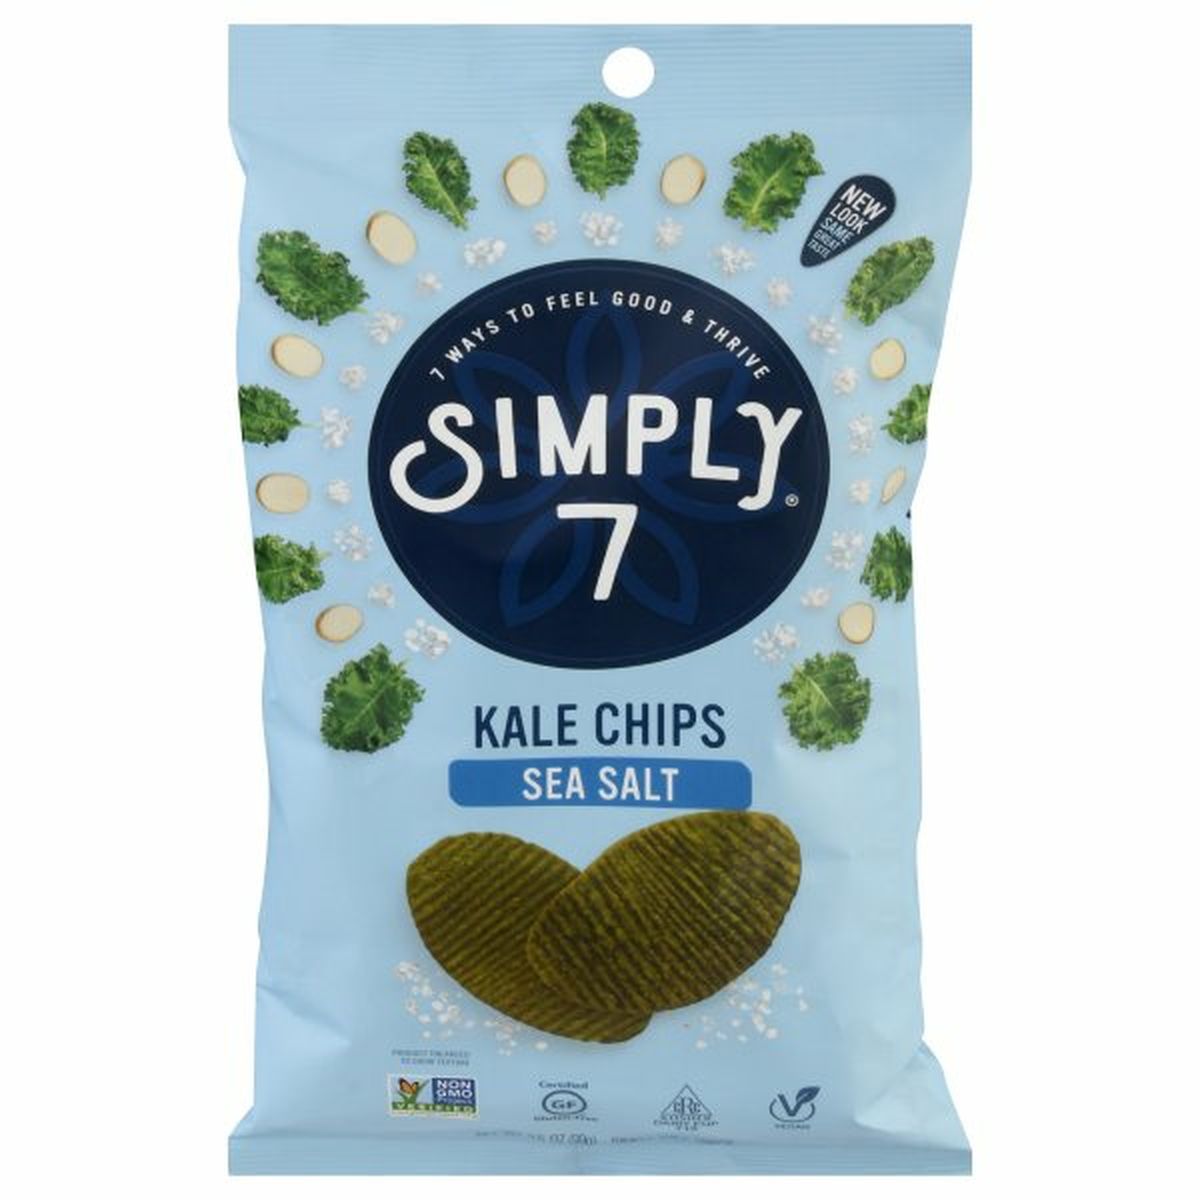 Calories in Simply7 Kale Chips, Sea Salt